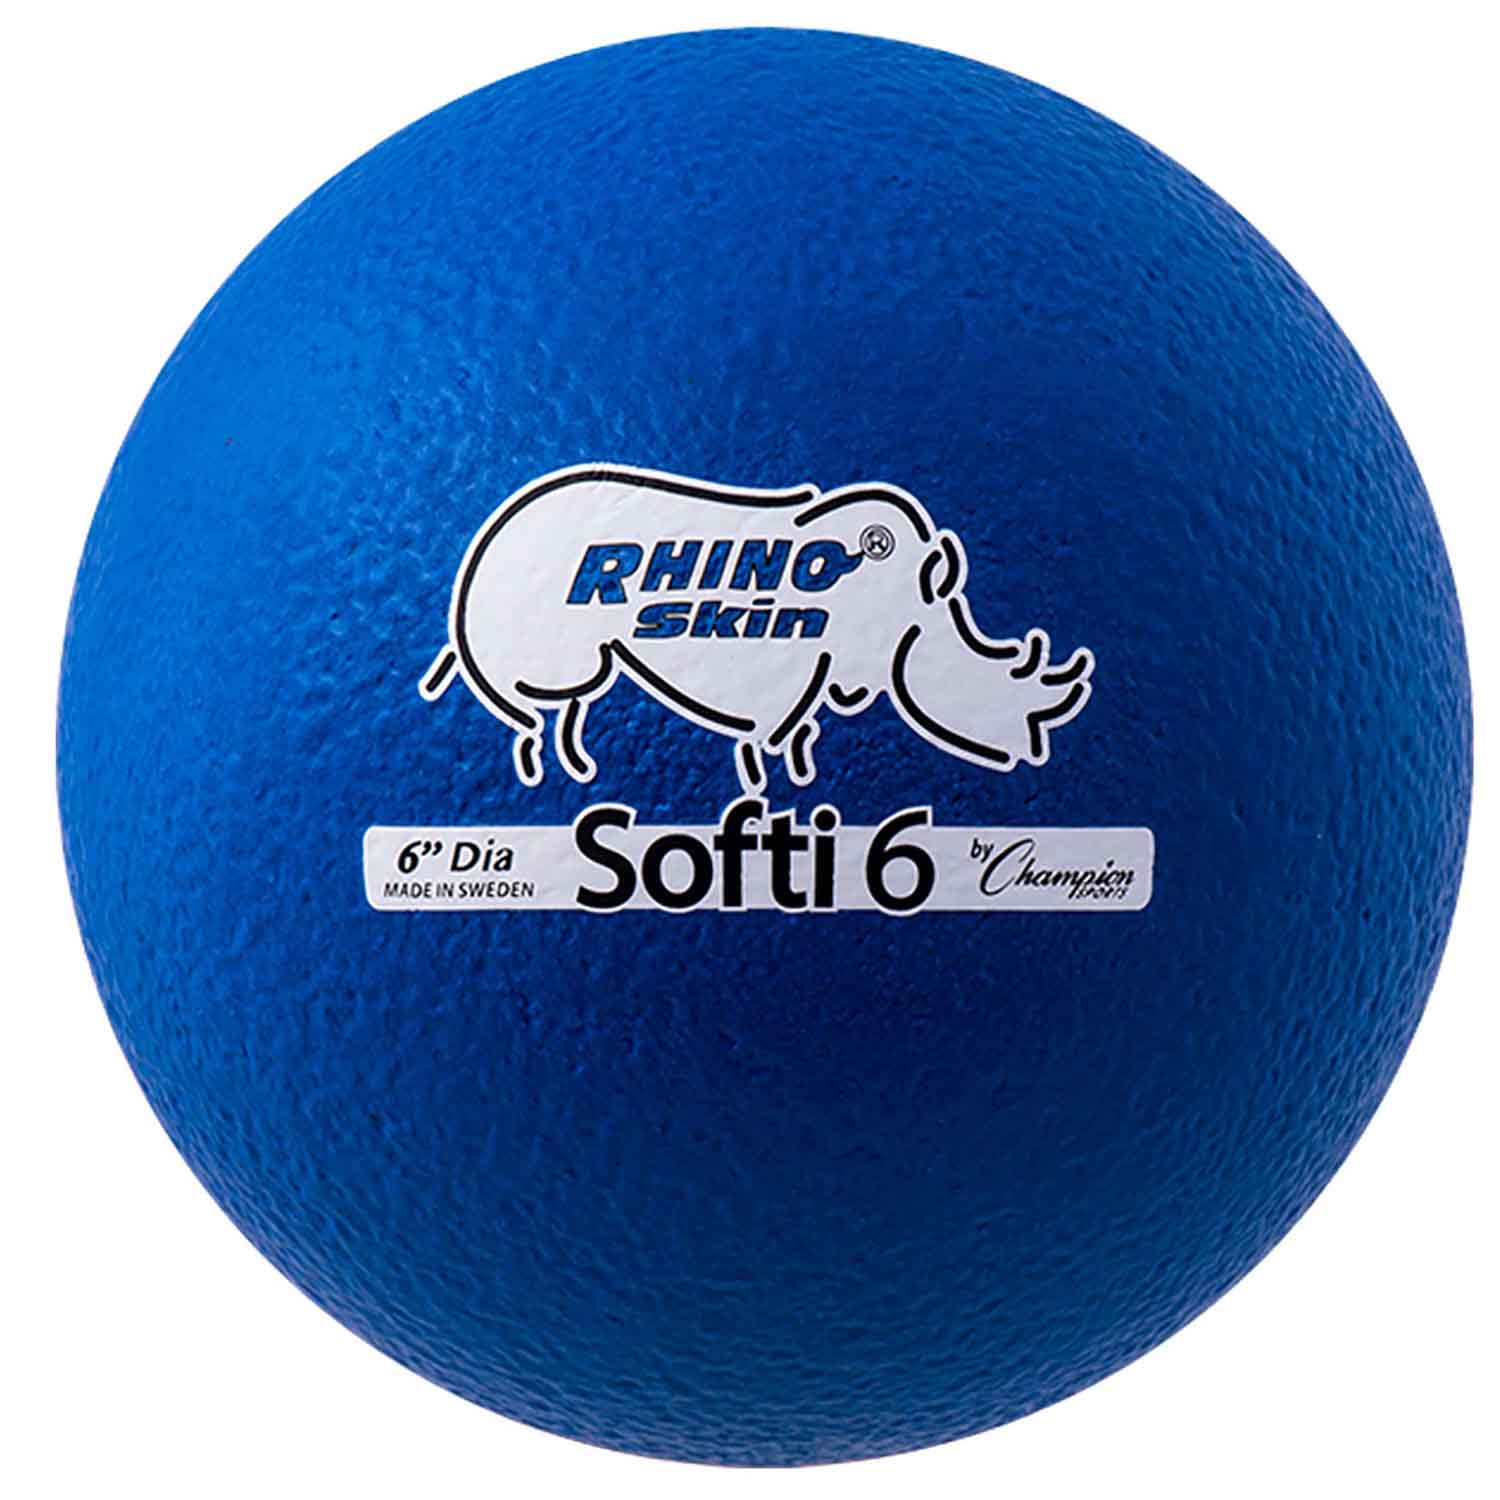 Rhino-Skin Ball Sets